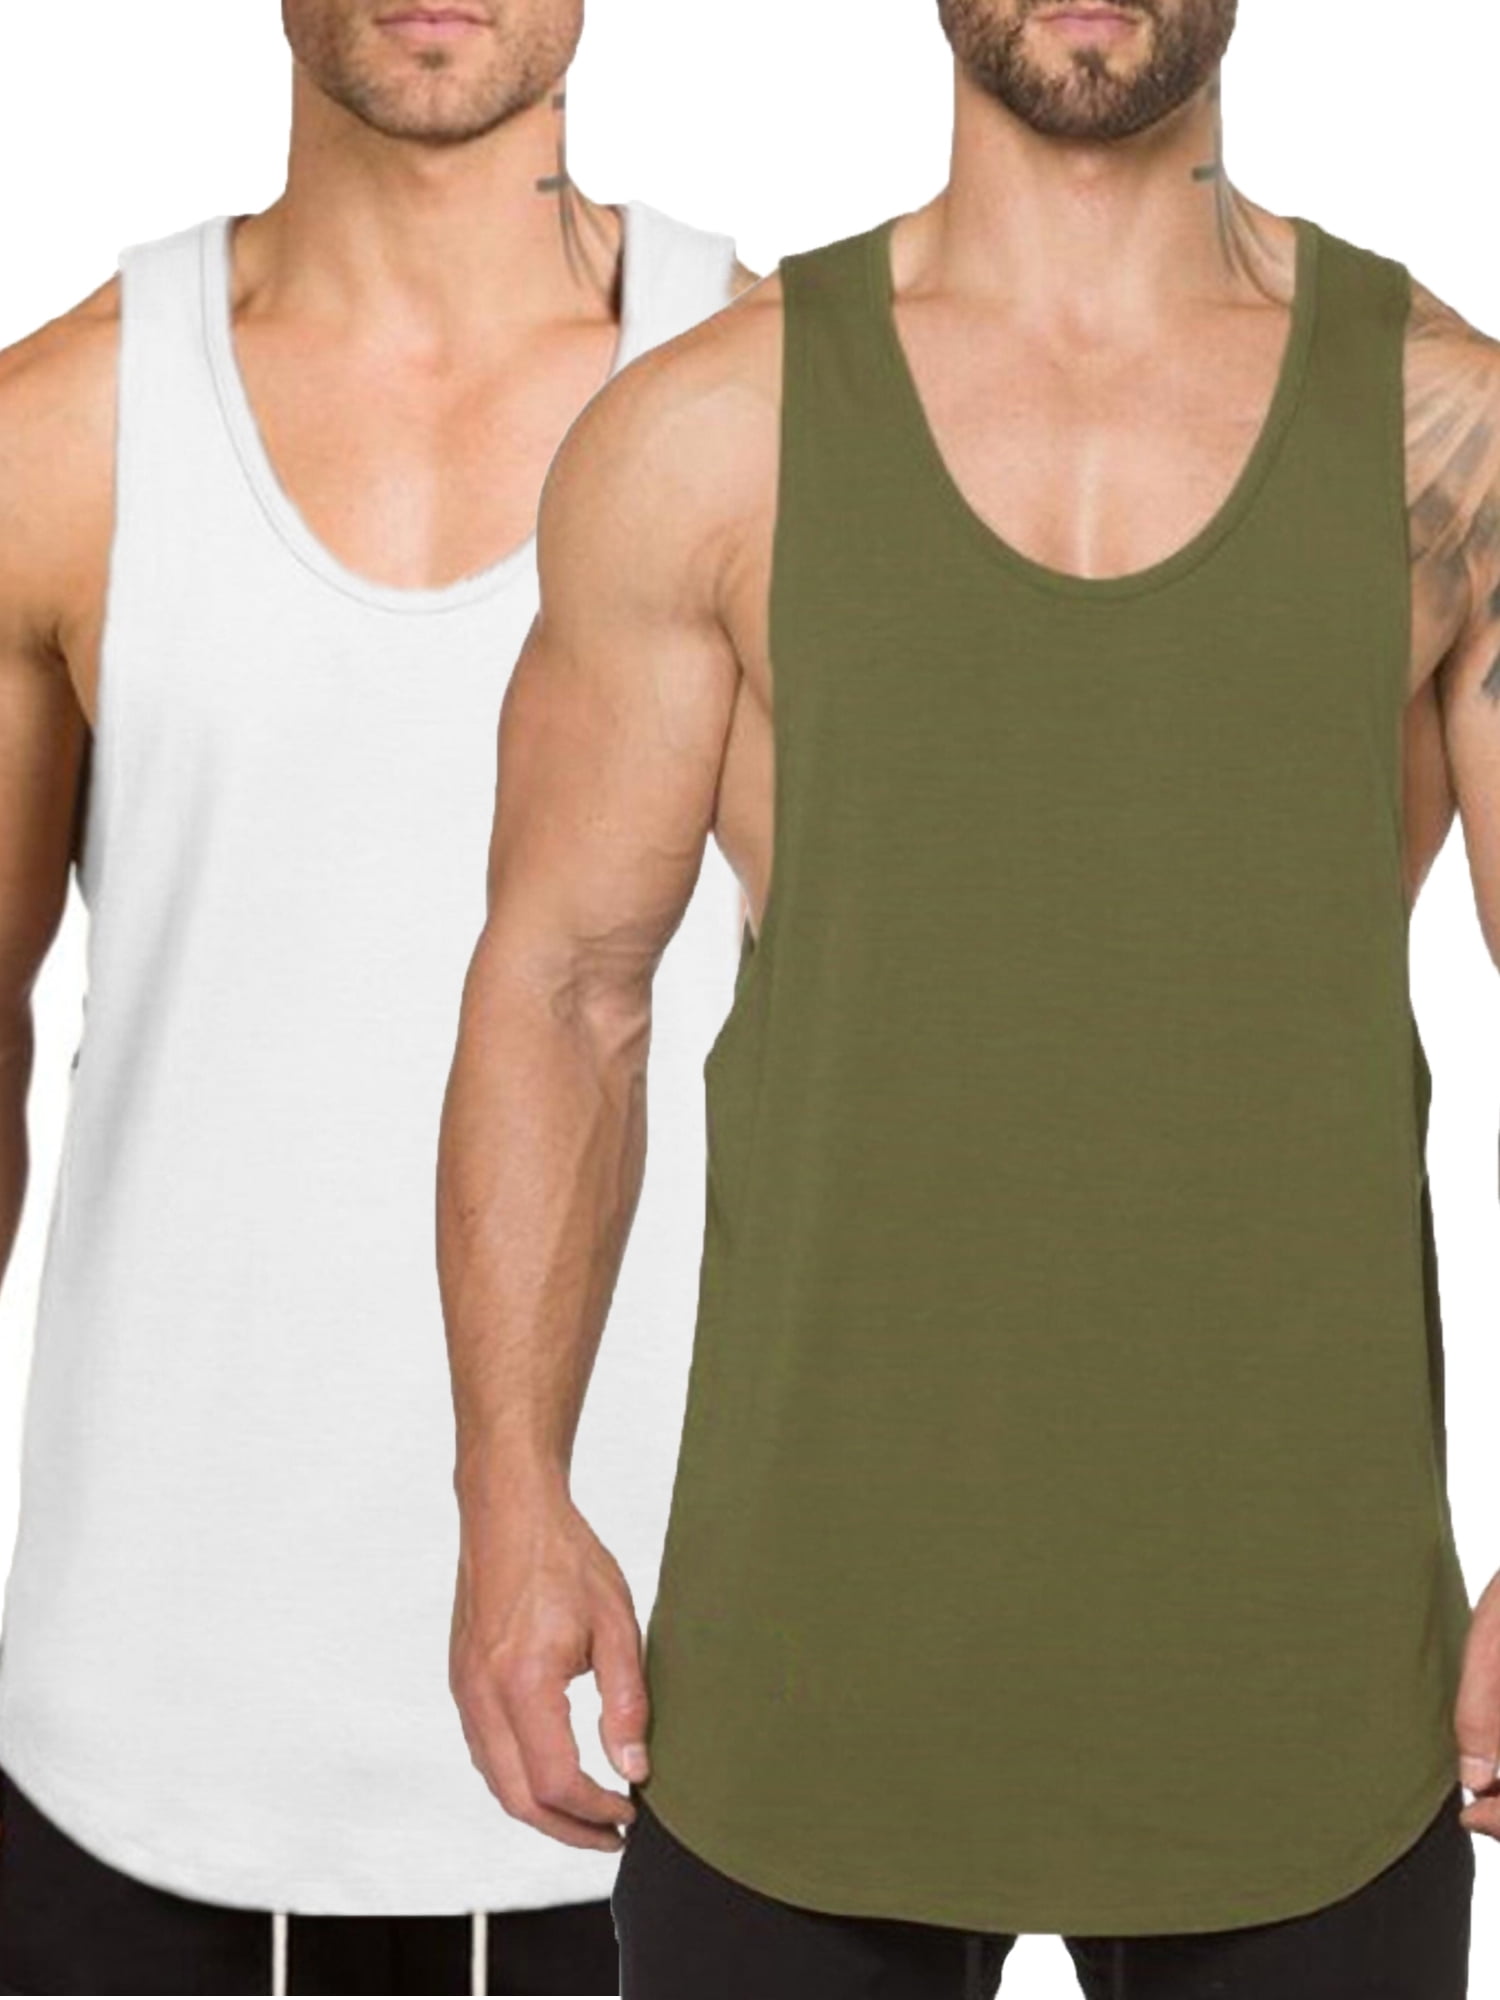 TX Apparel Mens Cut Off Tank Top Small Cotton Bodybuilding T-Shirts 